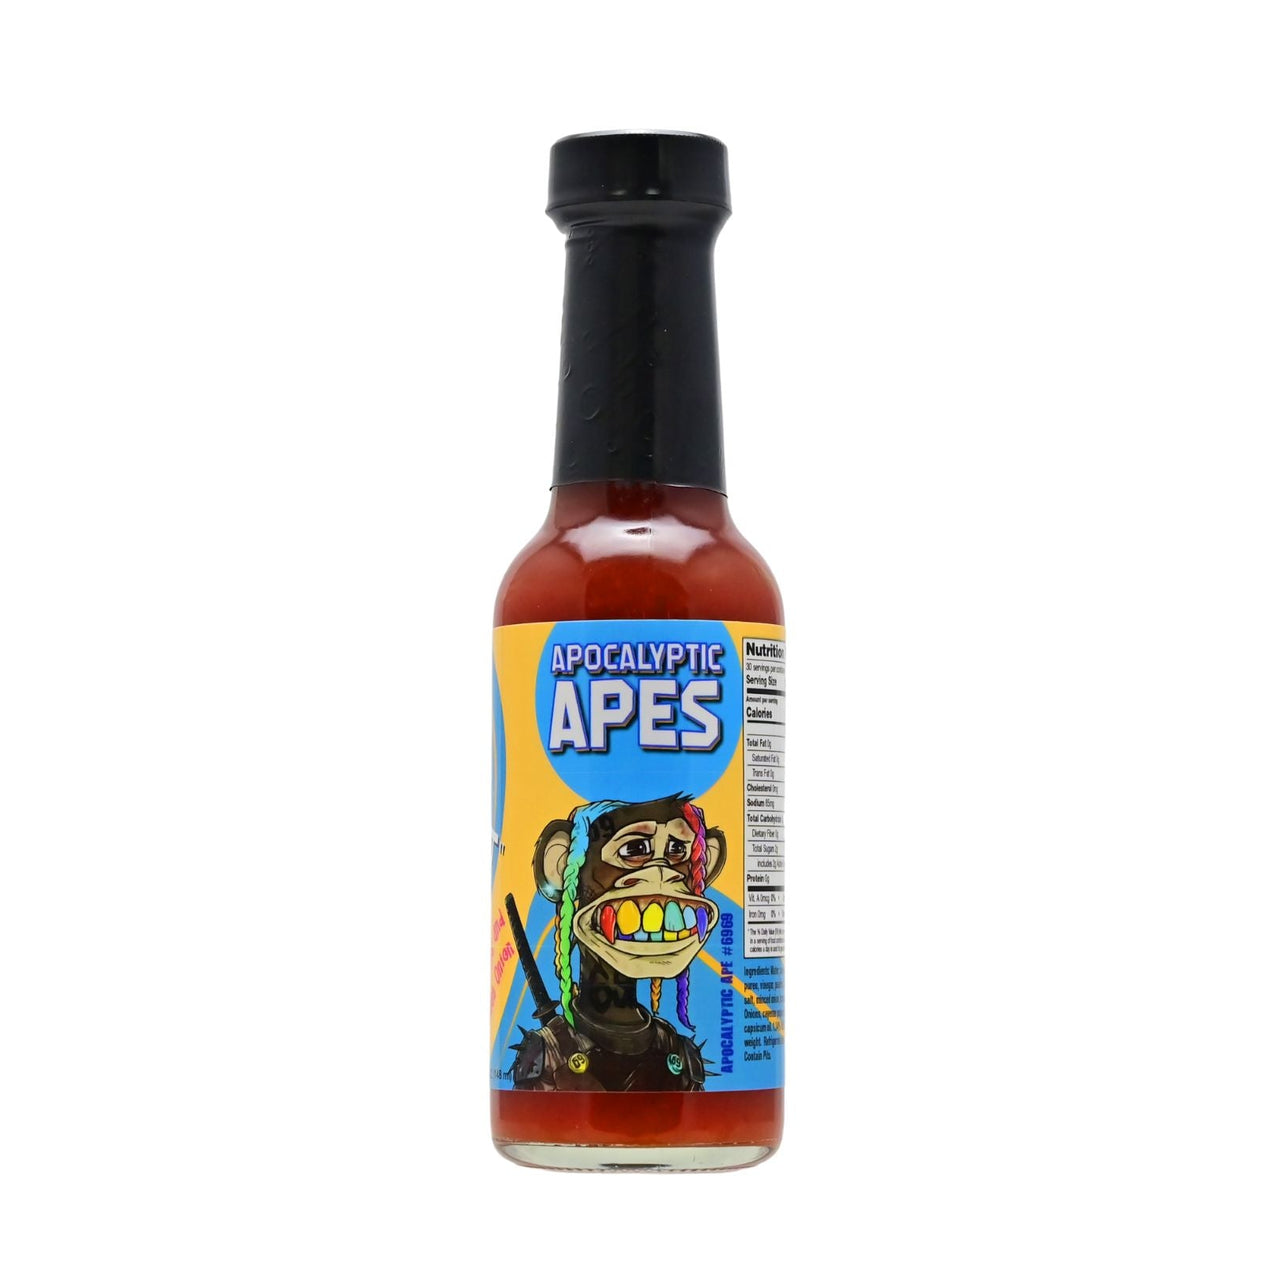 Apocalyptic Ape #6969 Kids "Not Hot" Sauce